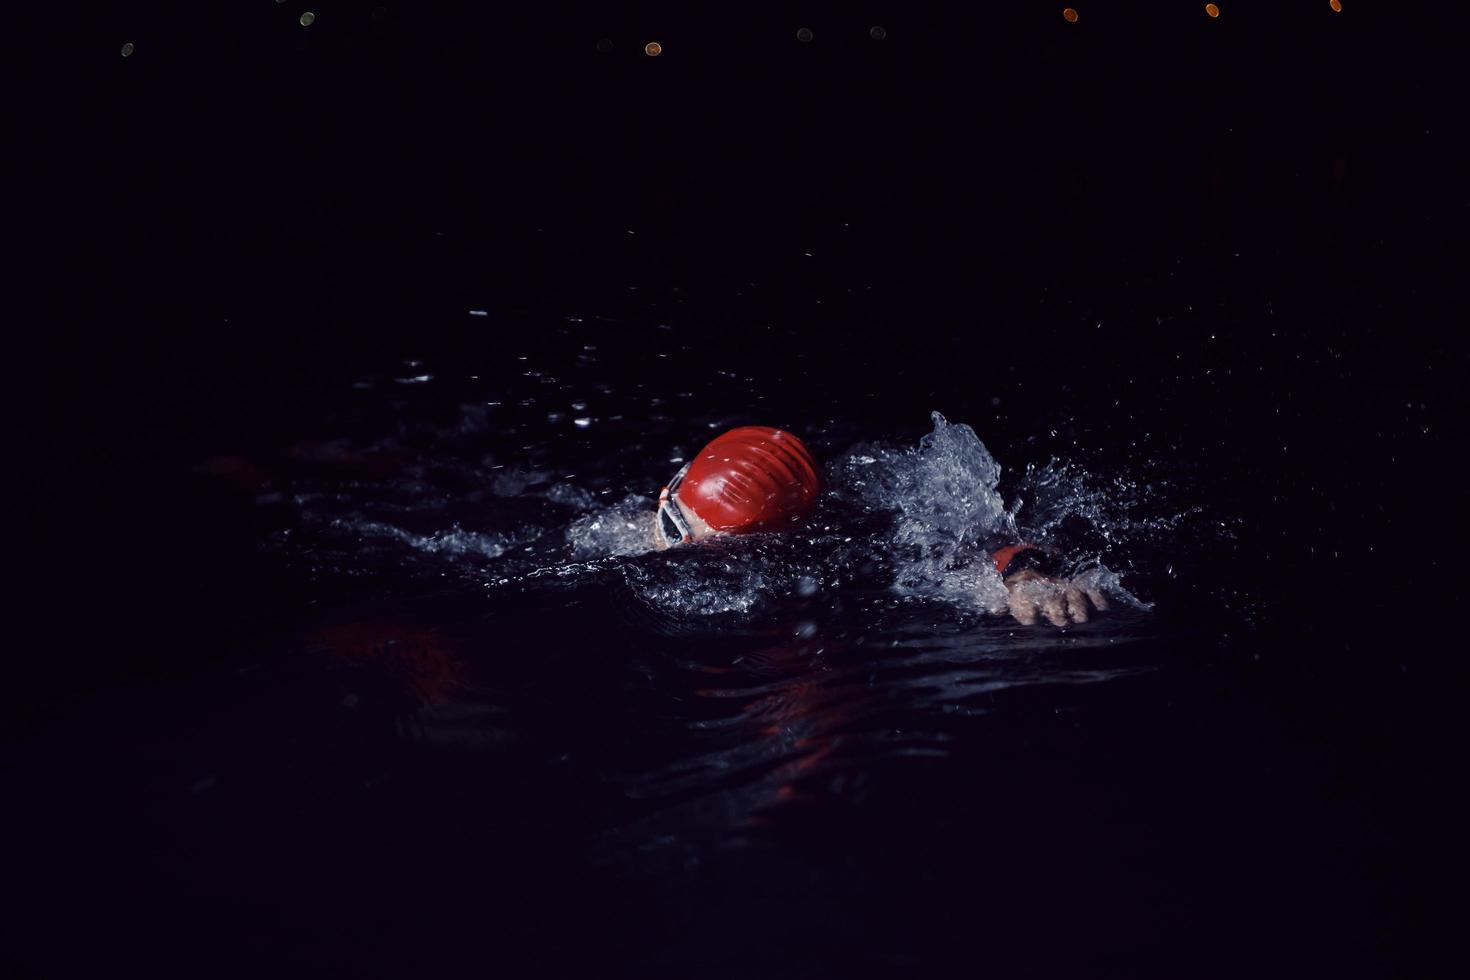 triathlon athlete swimming in dark night  wearing wetsuit photo